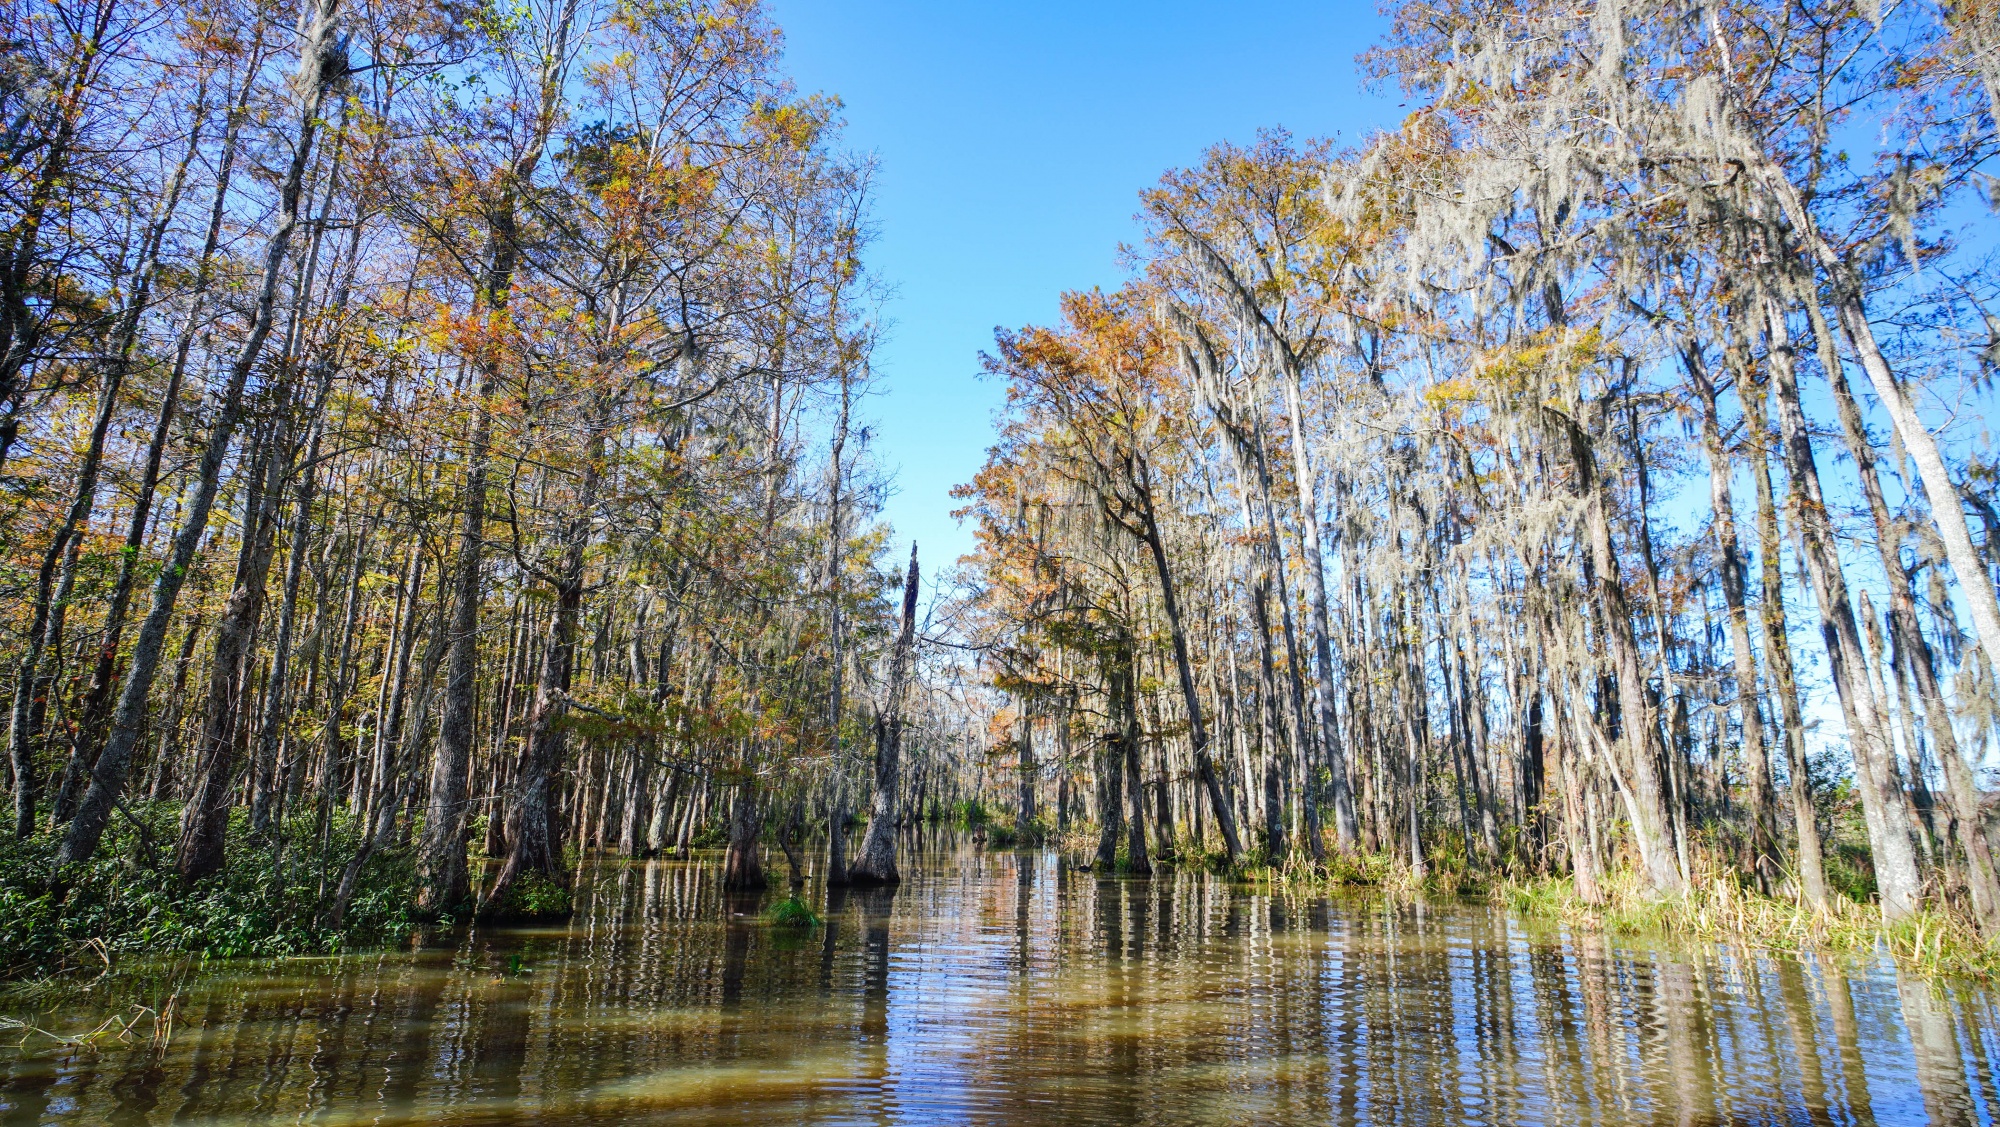 Best remote destinations, kayaking through a bayou river swamp called Honey Island Swamp Louisiana